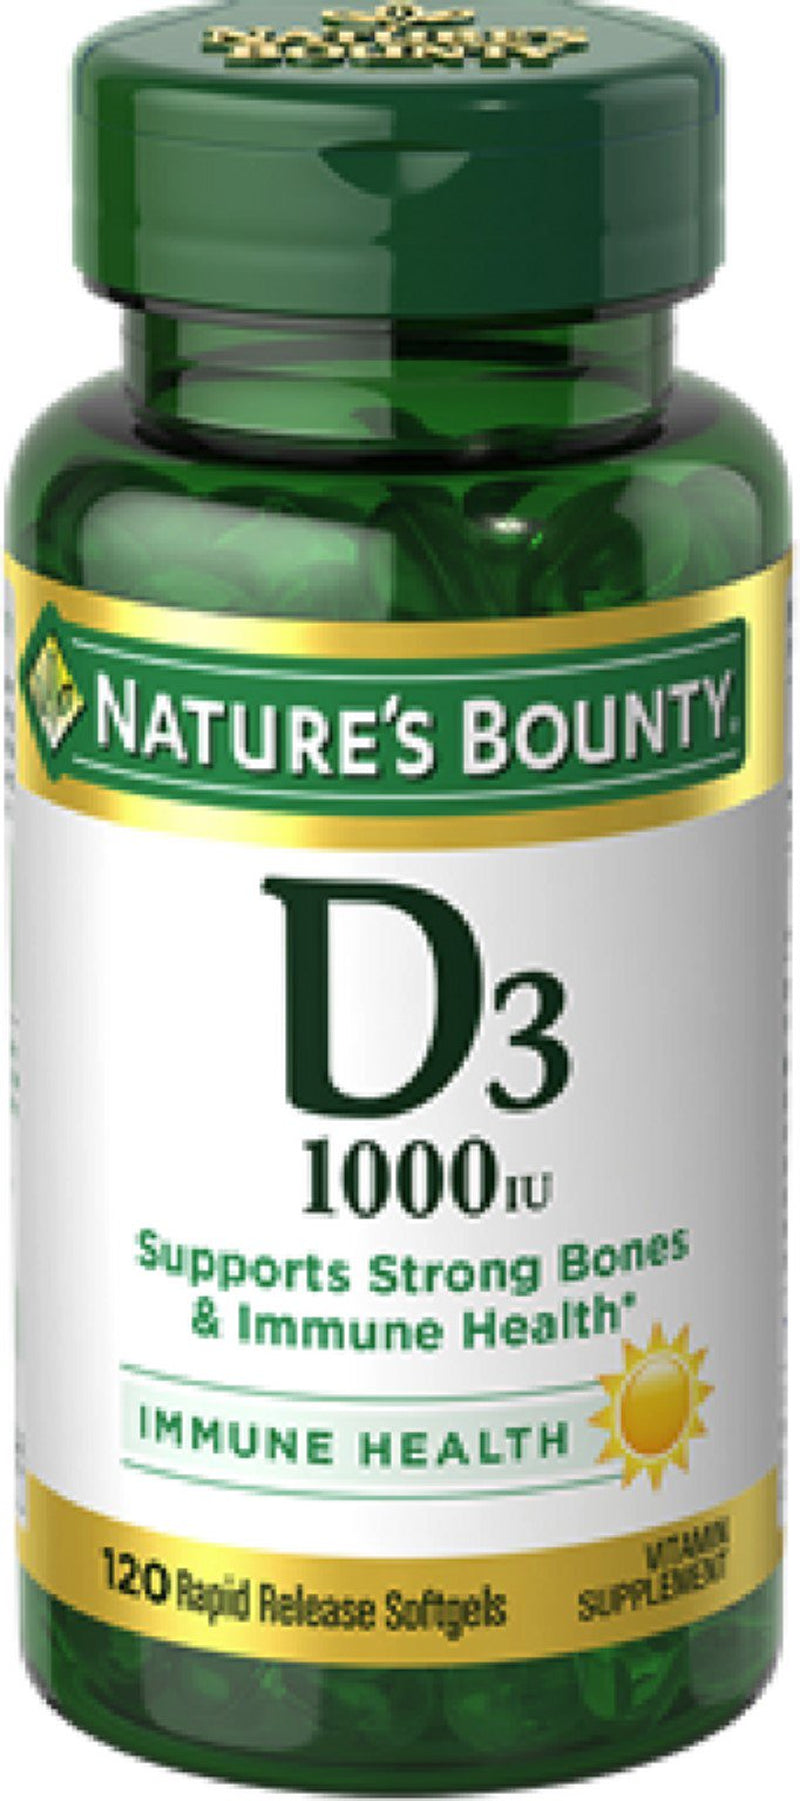 Nature'S Bounty Vitamin D3 1000 IU Immune Health, 120 Softgels (Pack of 3)